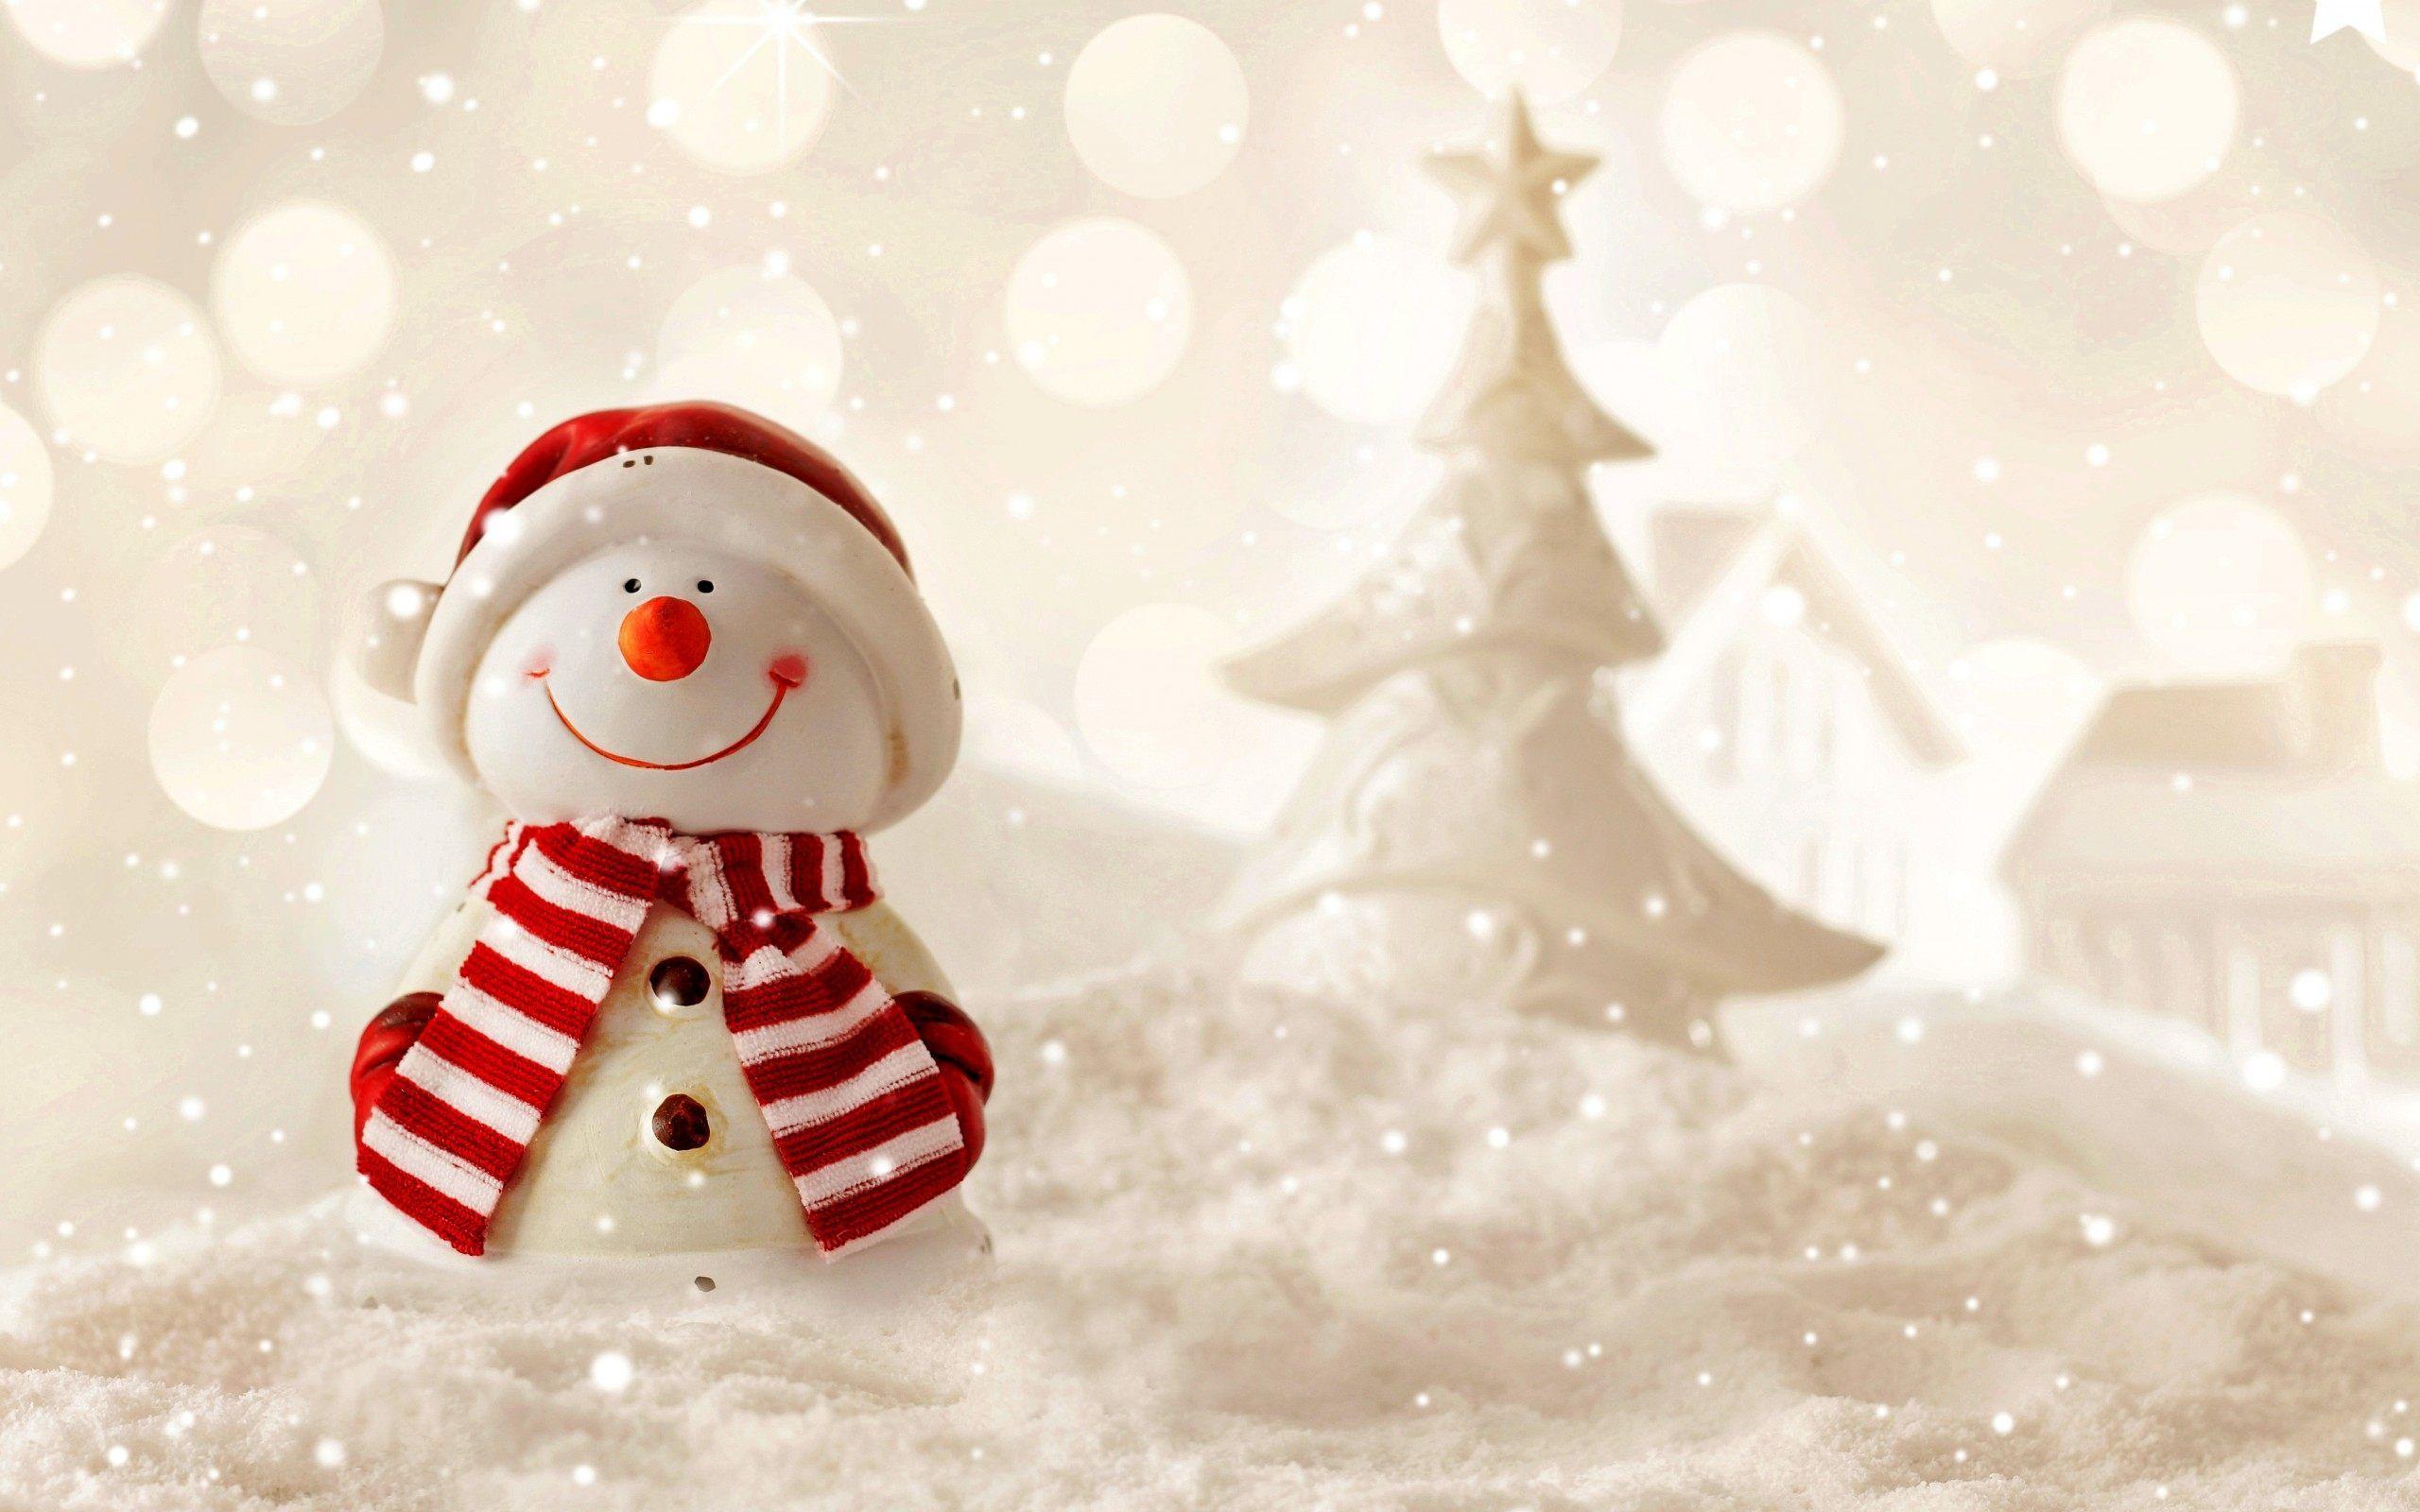 Snowman Wallpapers Top Free Snowman Backgrounds Wallpaperaccess